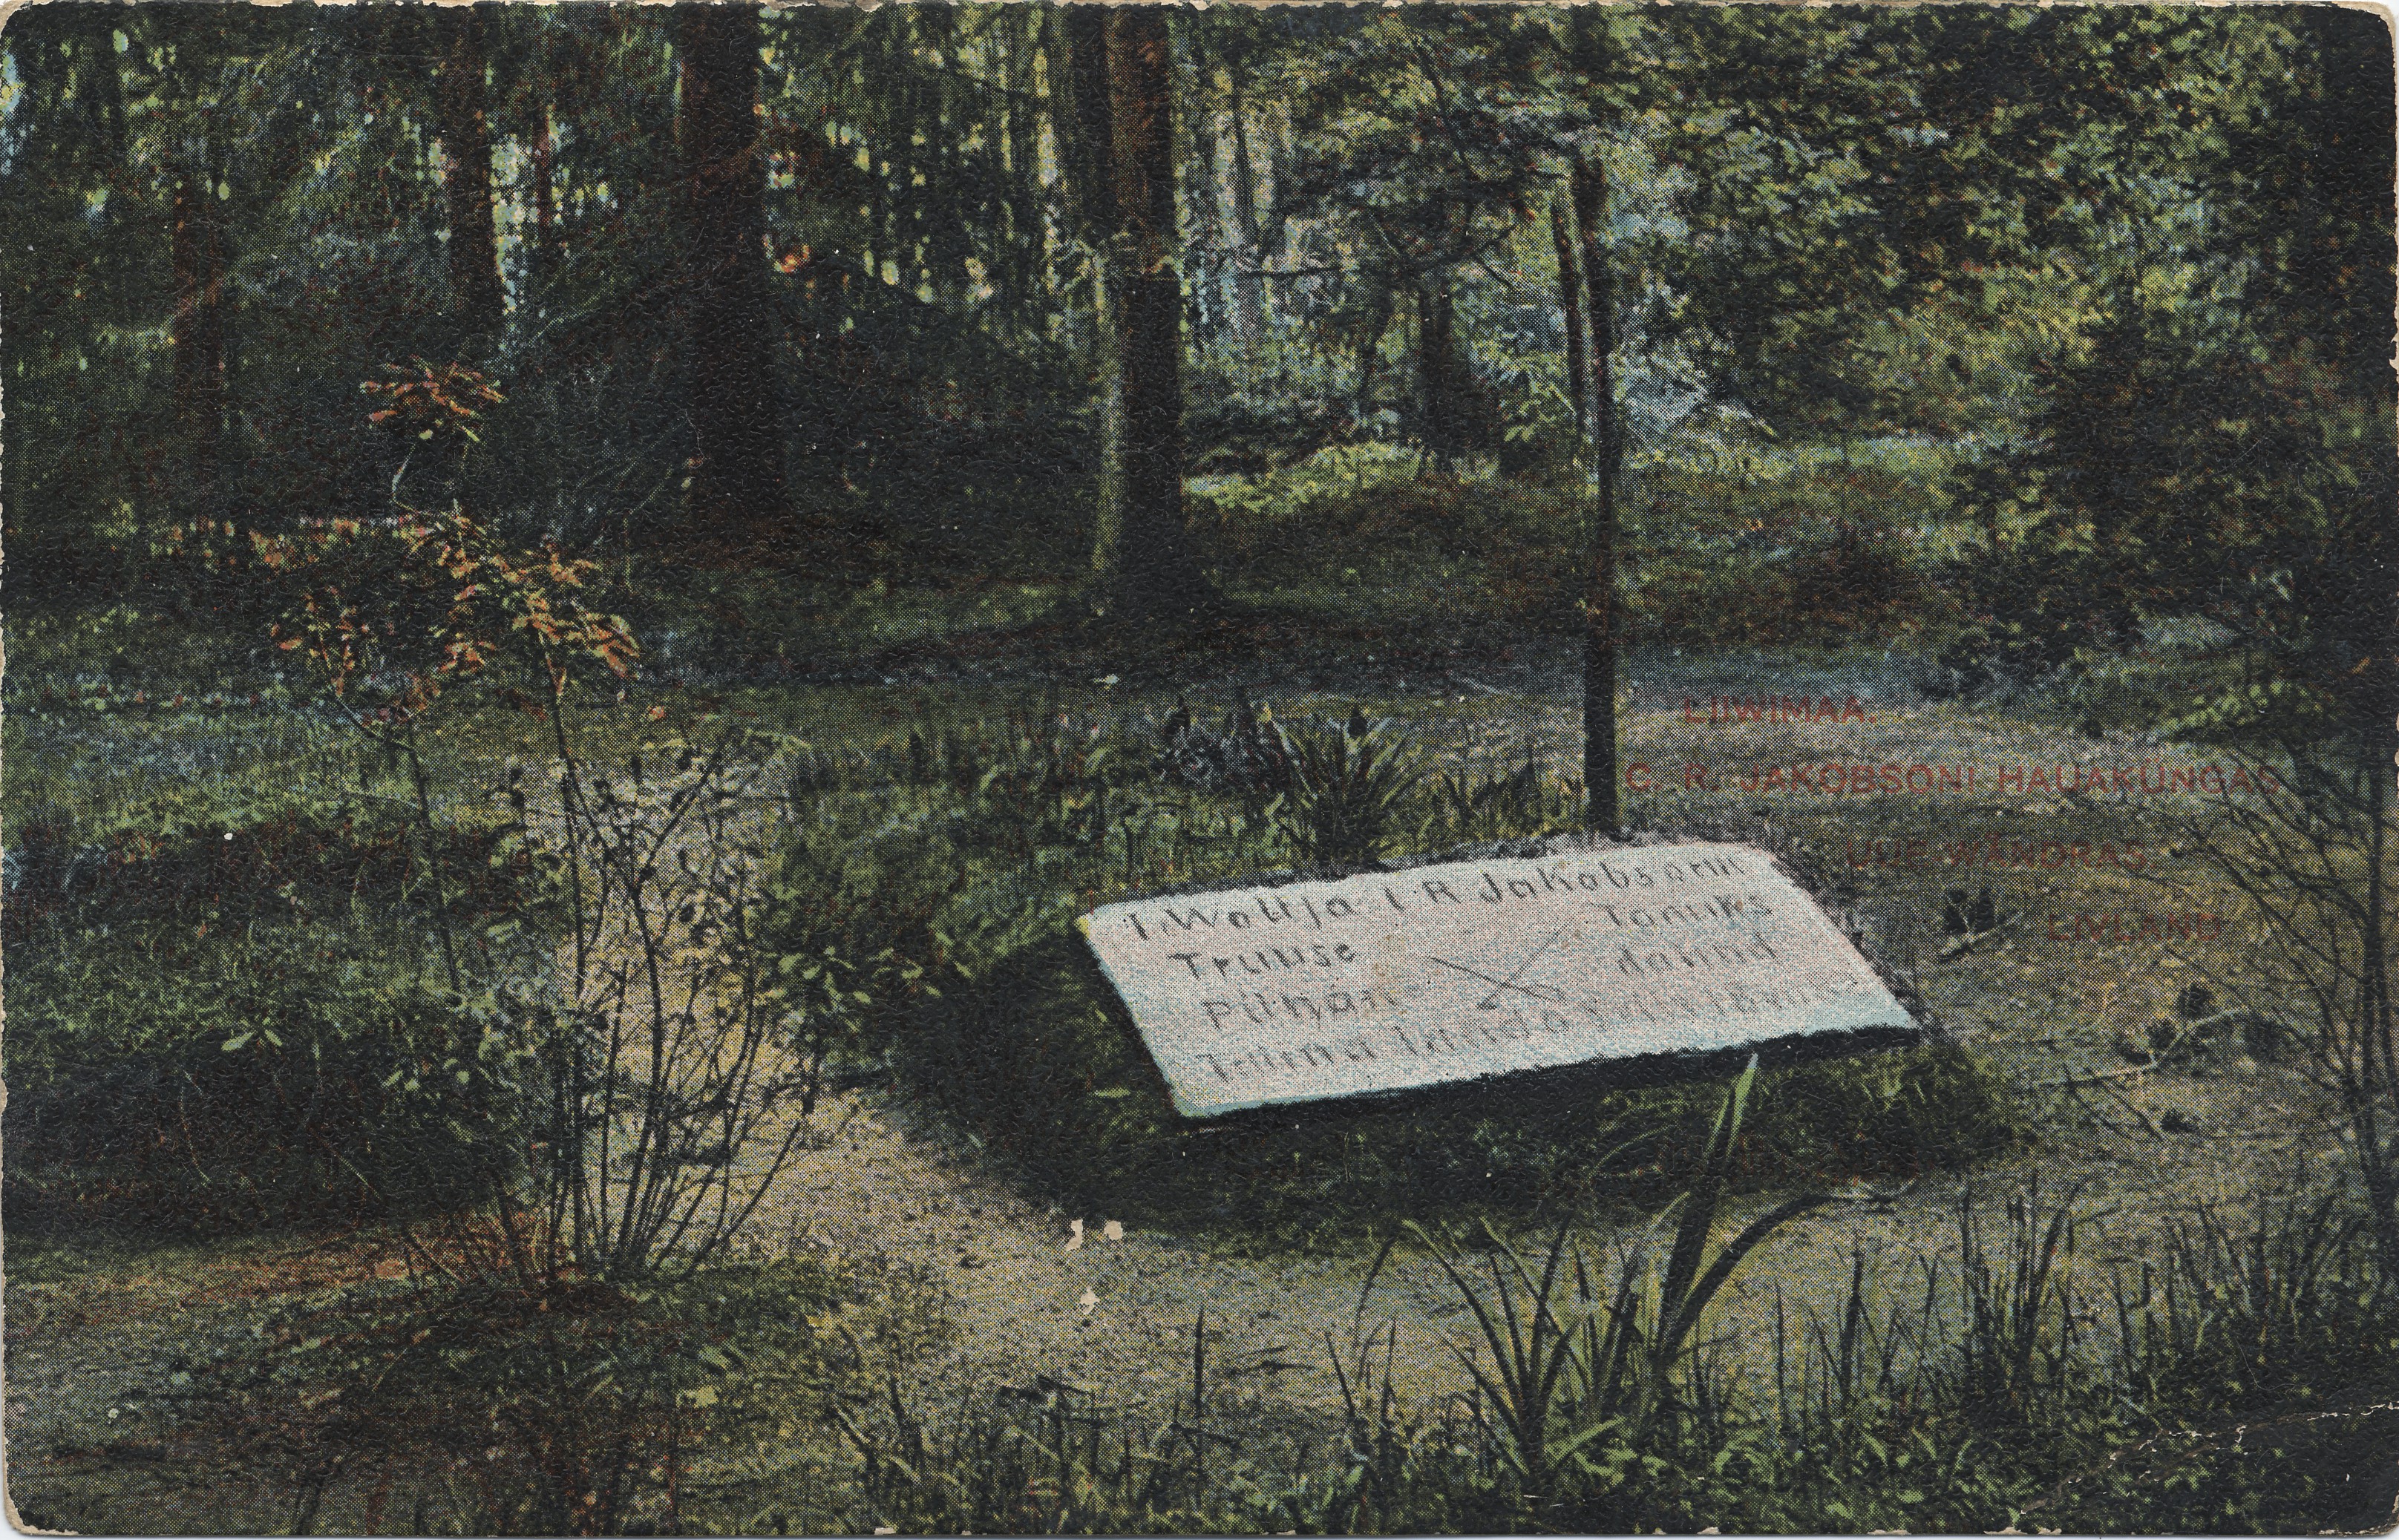 Livimaa : C. R. Jakobson's grave hill New-Wändras = Livland